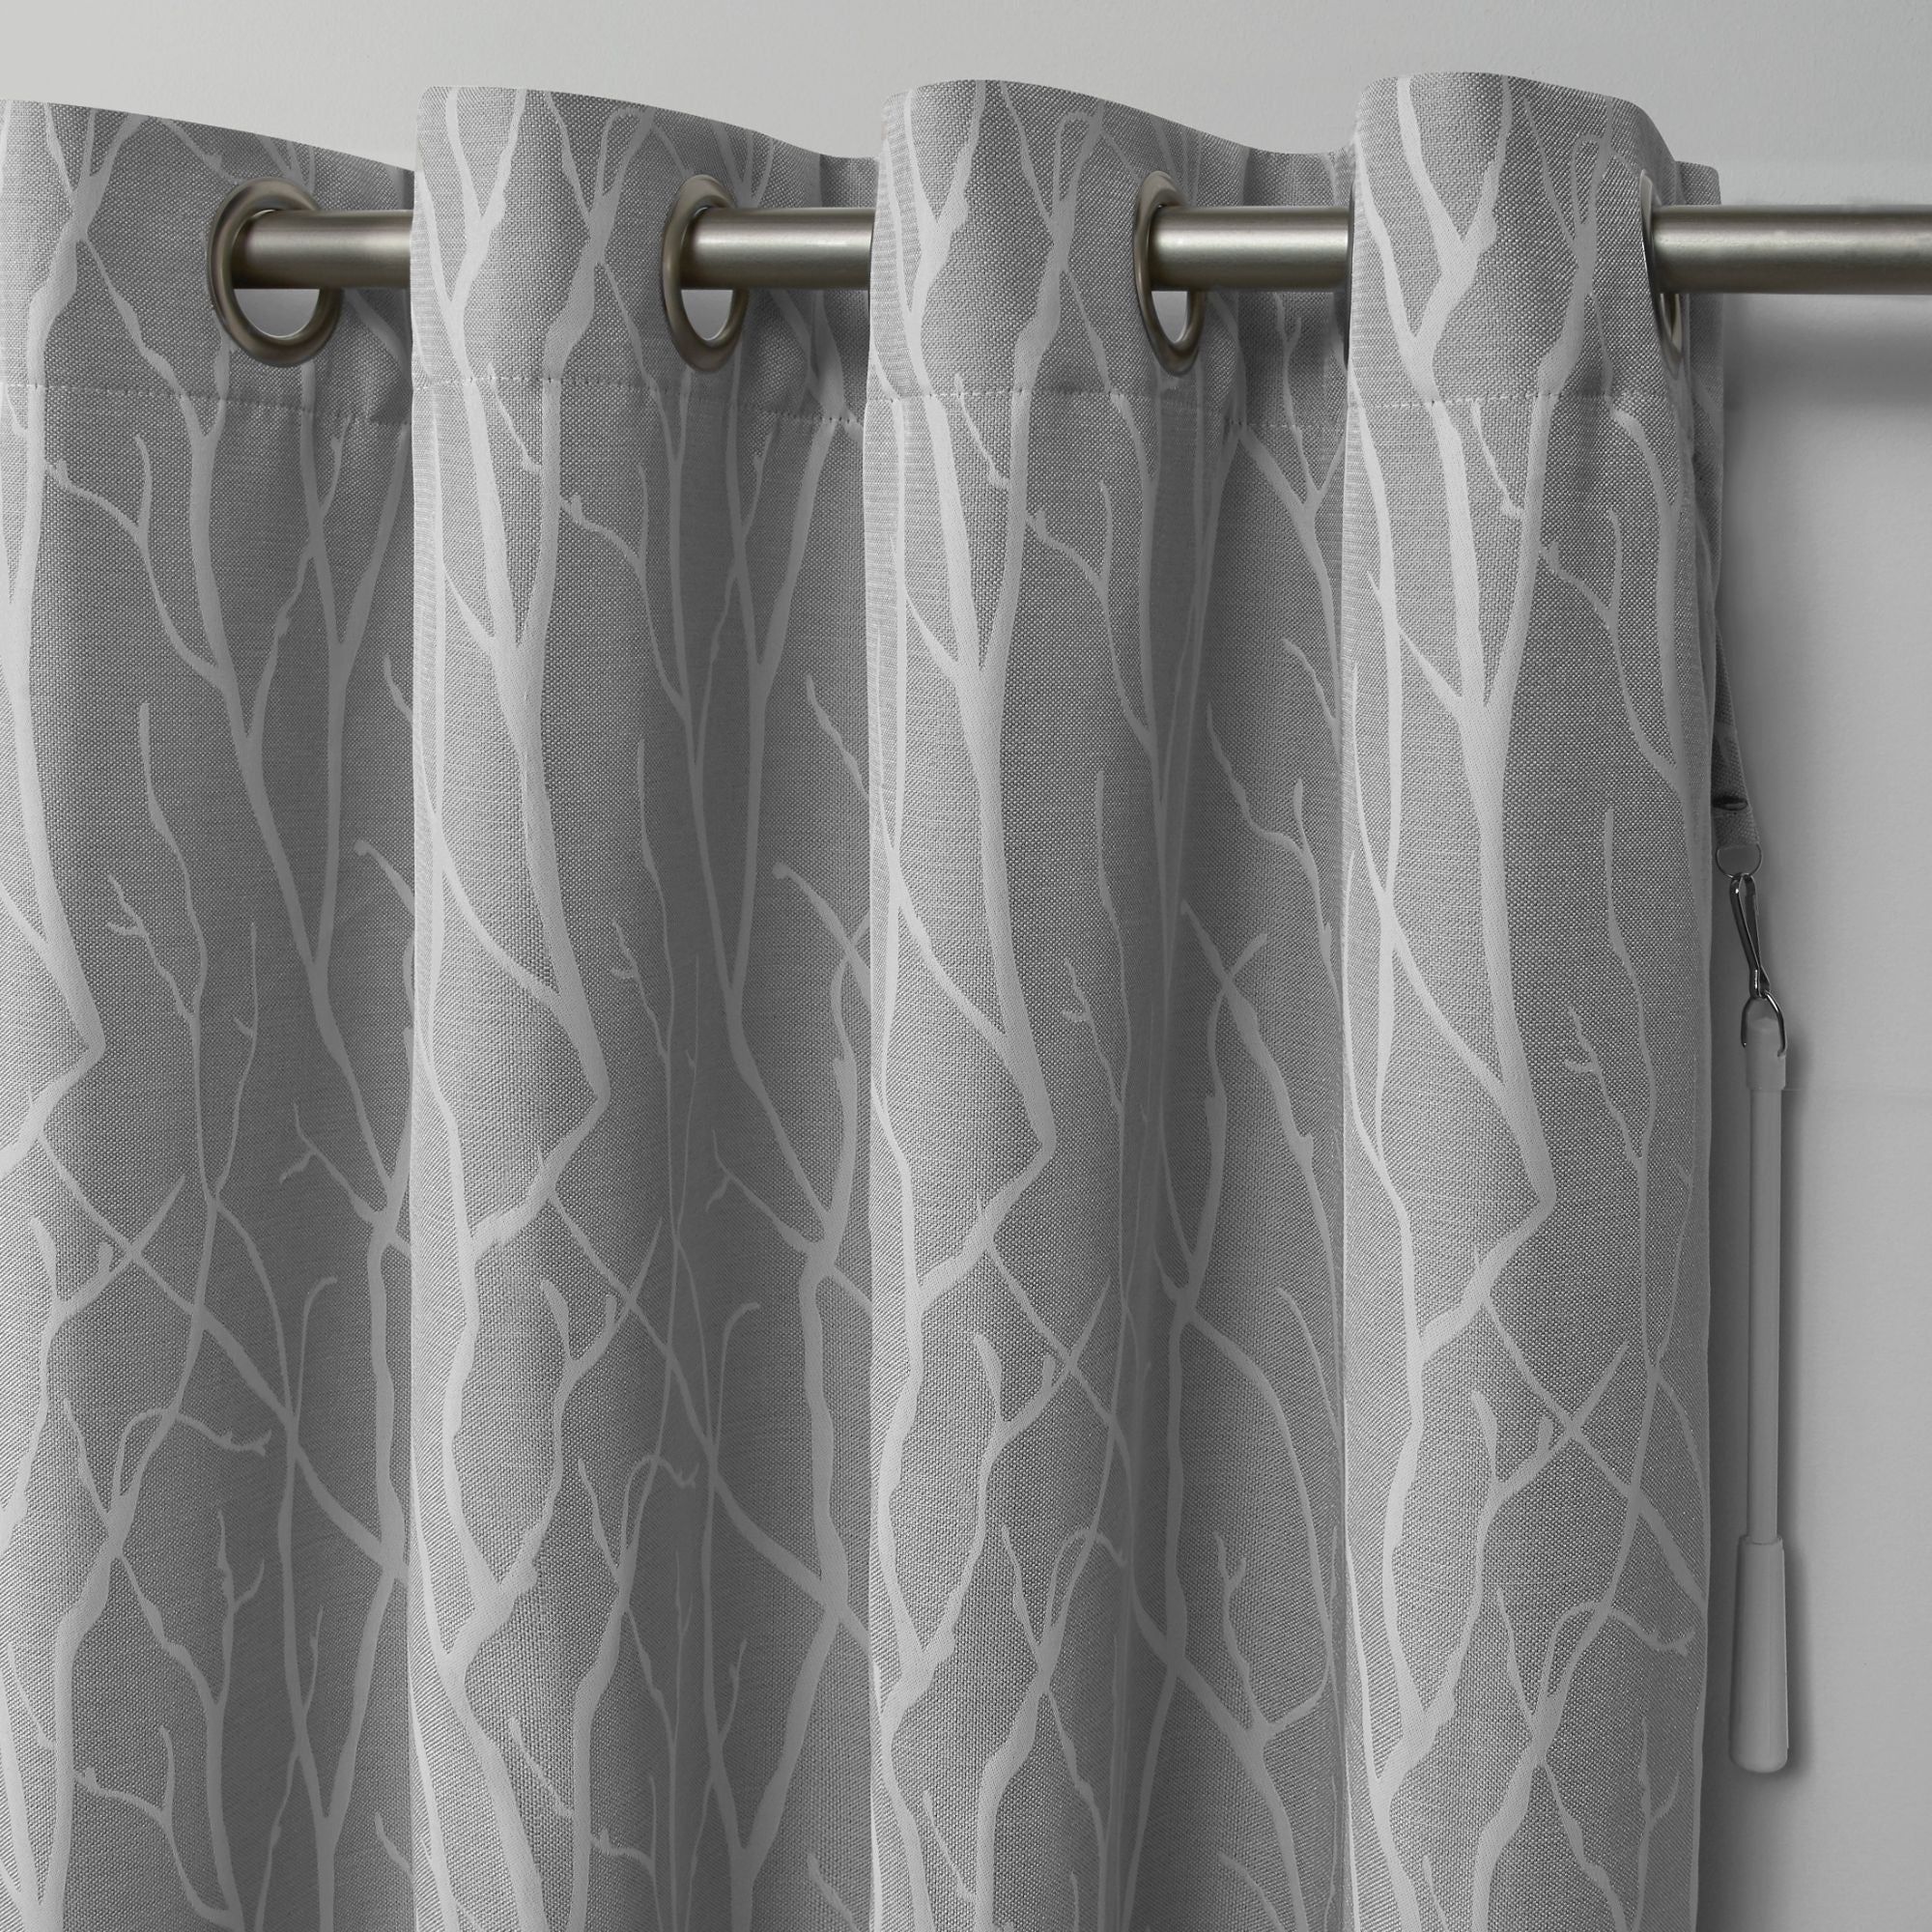 Porch & Den Davis Patio Grommet Top 84 Inch X 108 Inch Single Curtain Panel With Regard To Davis Patio Grommet Top Single Curtain Panels (View 3 of 20)